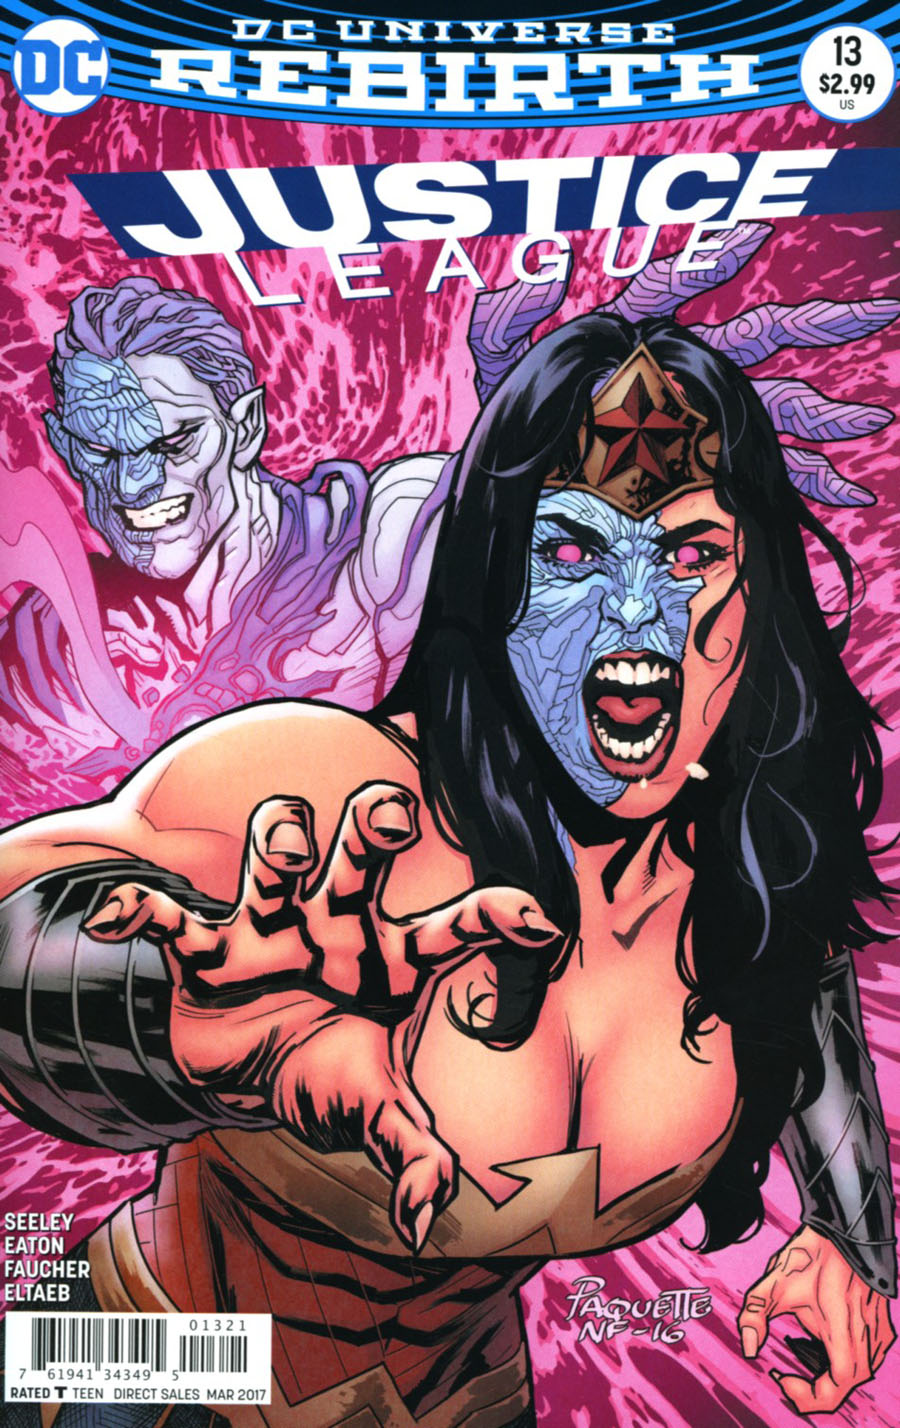 Justice League Vol 3 #13 Cover B Variant Yanick Paquette Cover (Justice League vs Suicide Squad Tie-In)